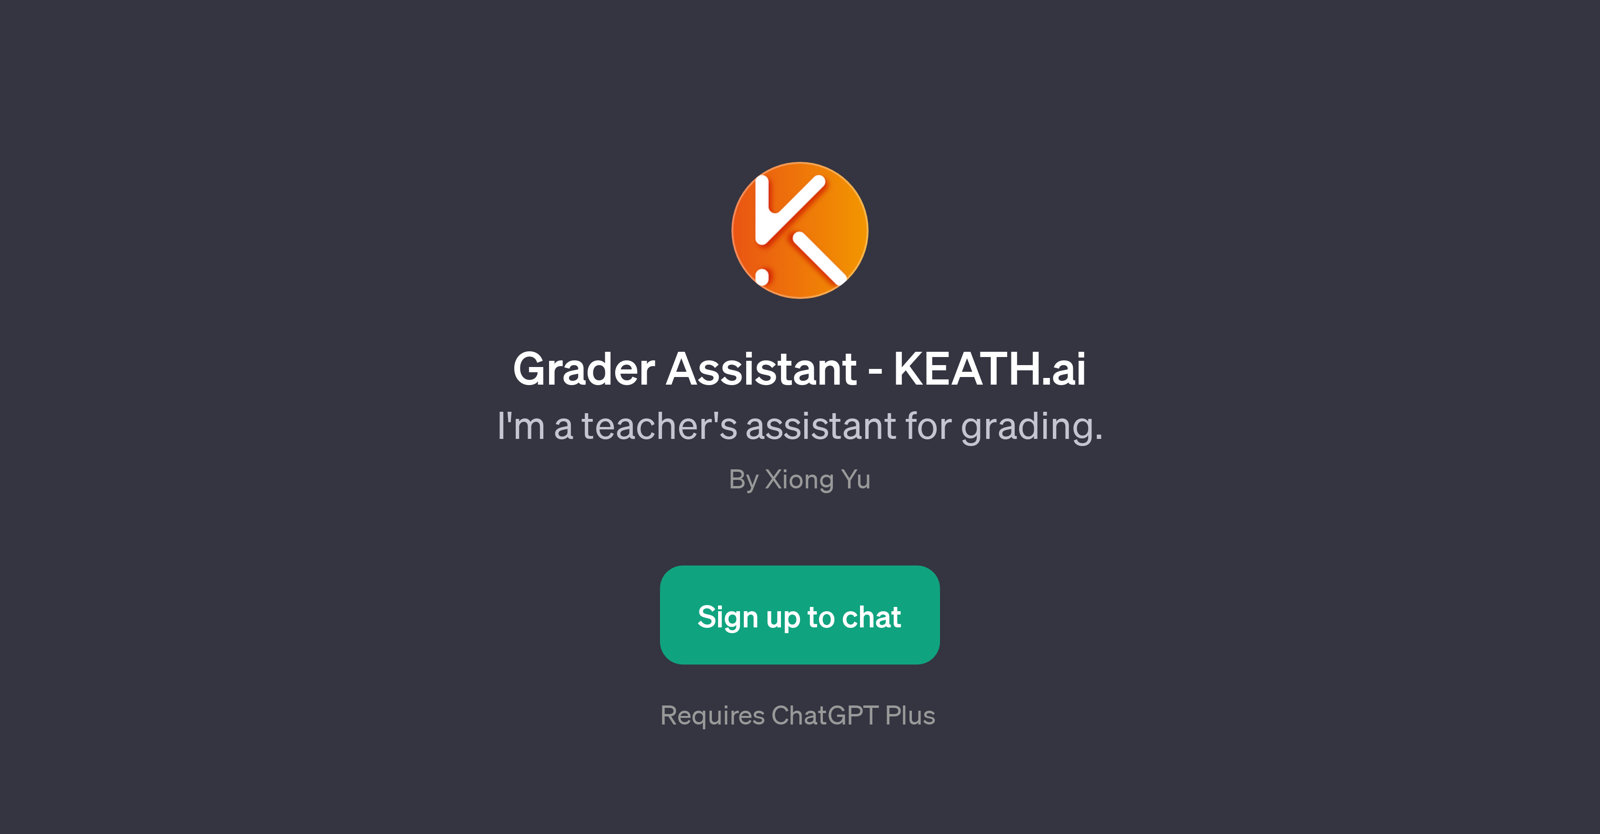 Grader Assistant - KEATH.ai website